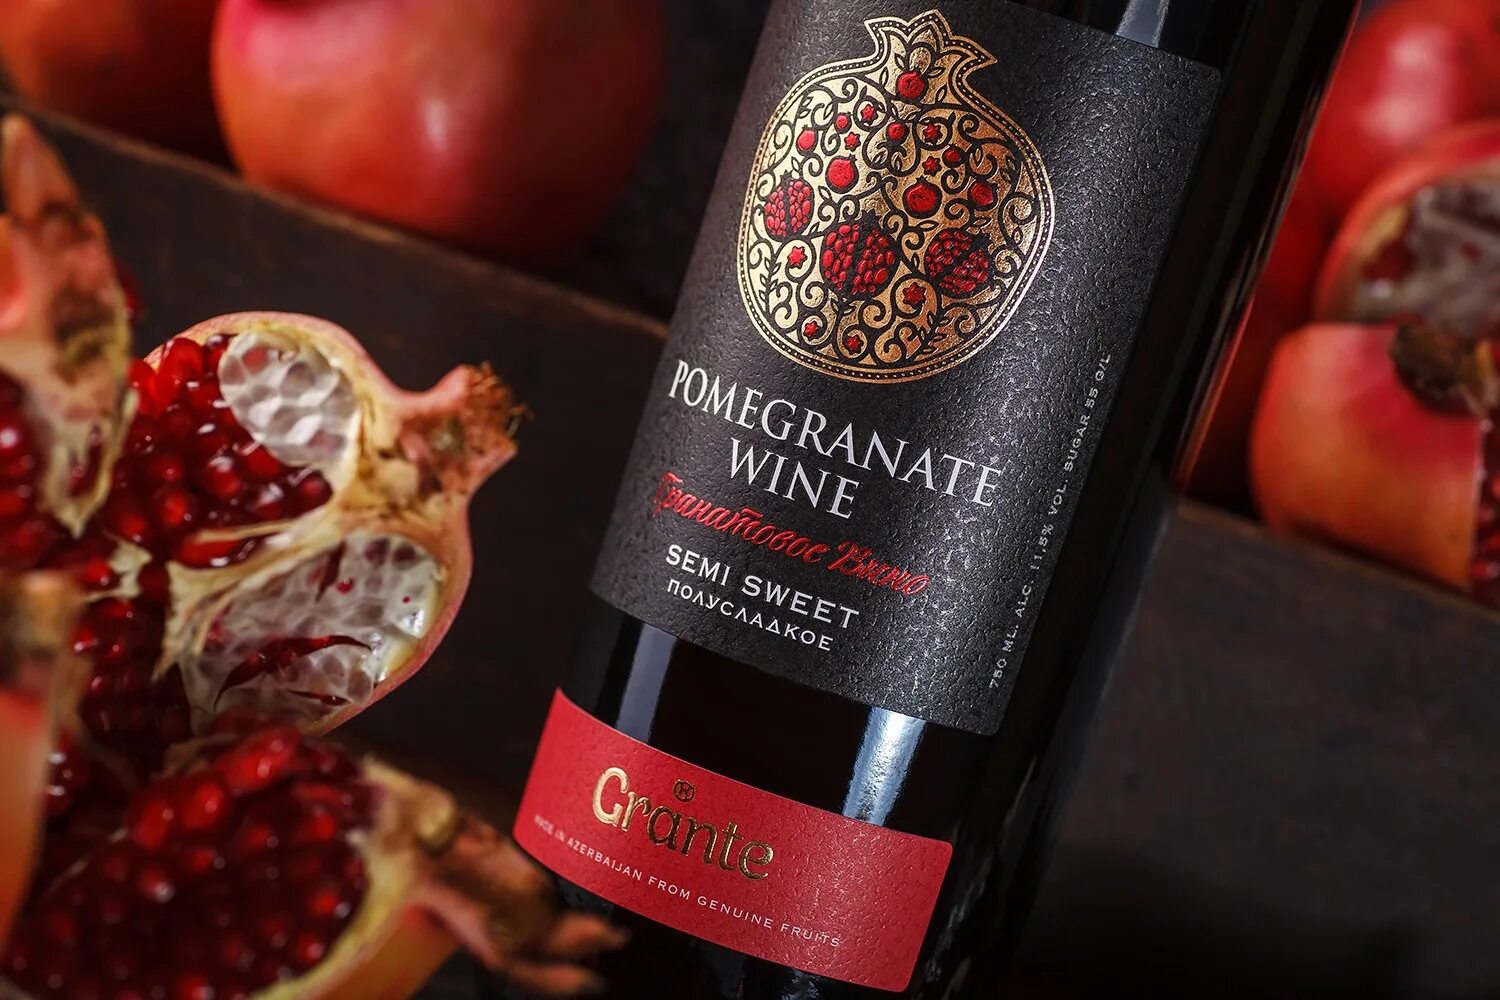 Вино Pomegranate Wine. Вино Помегранате Гранатовое. Красное и белое Гранатовое вино Азербайджан. Гранатовое вино Роме гранат. Вино гранате купить